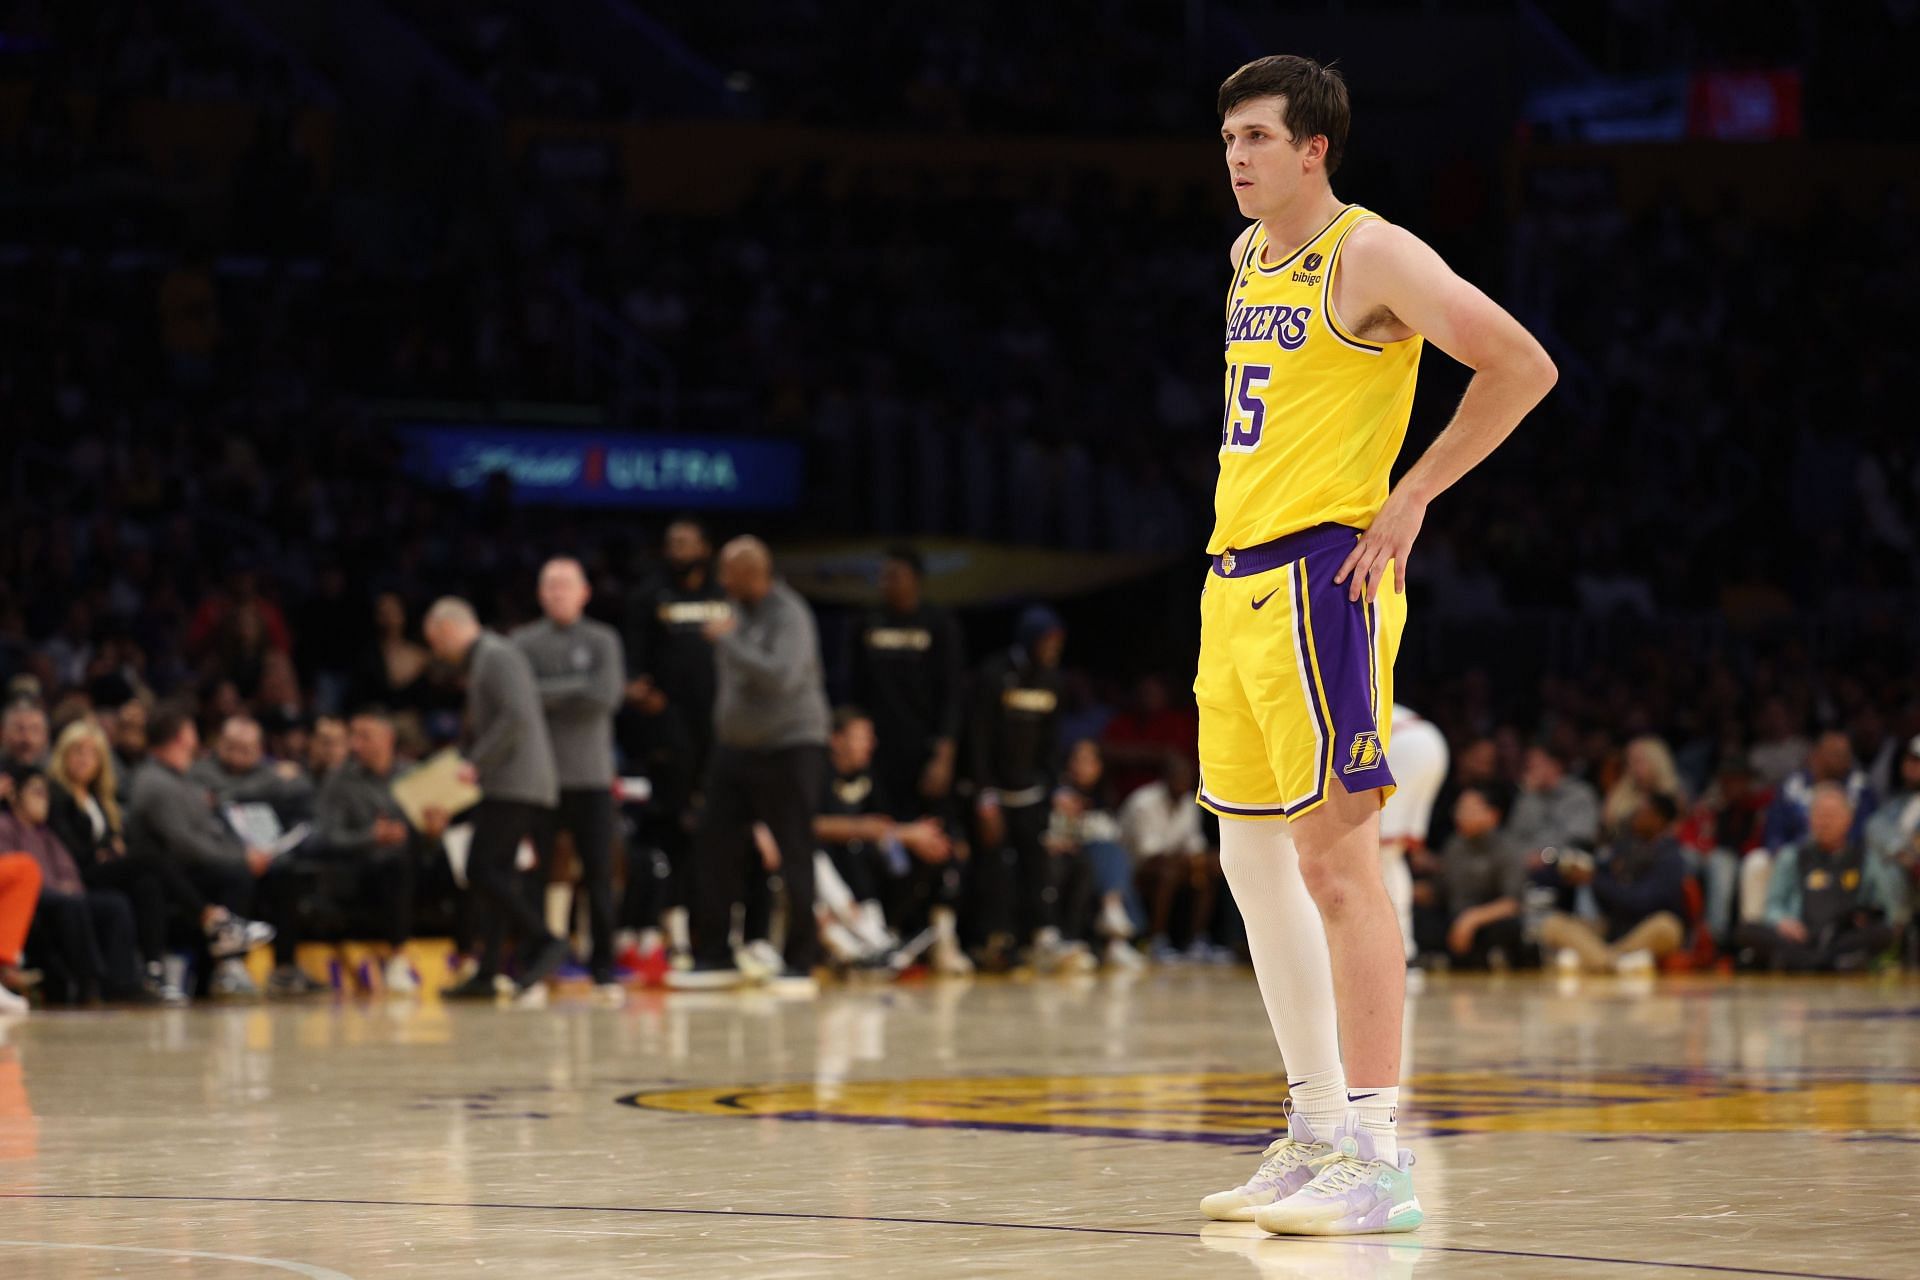 Lakers: jogador comenta suposto affair com Taylor Swift